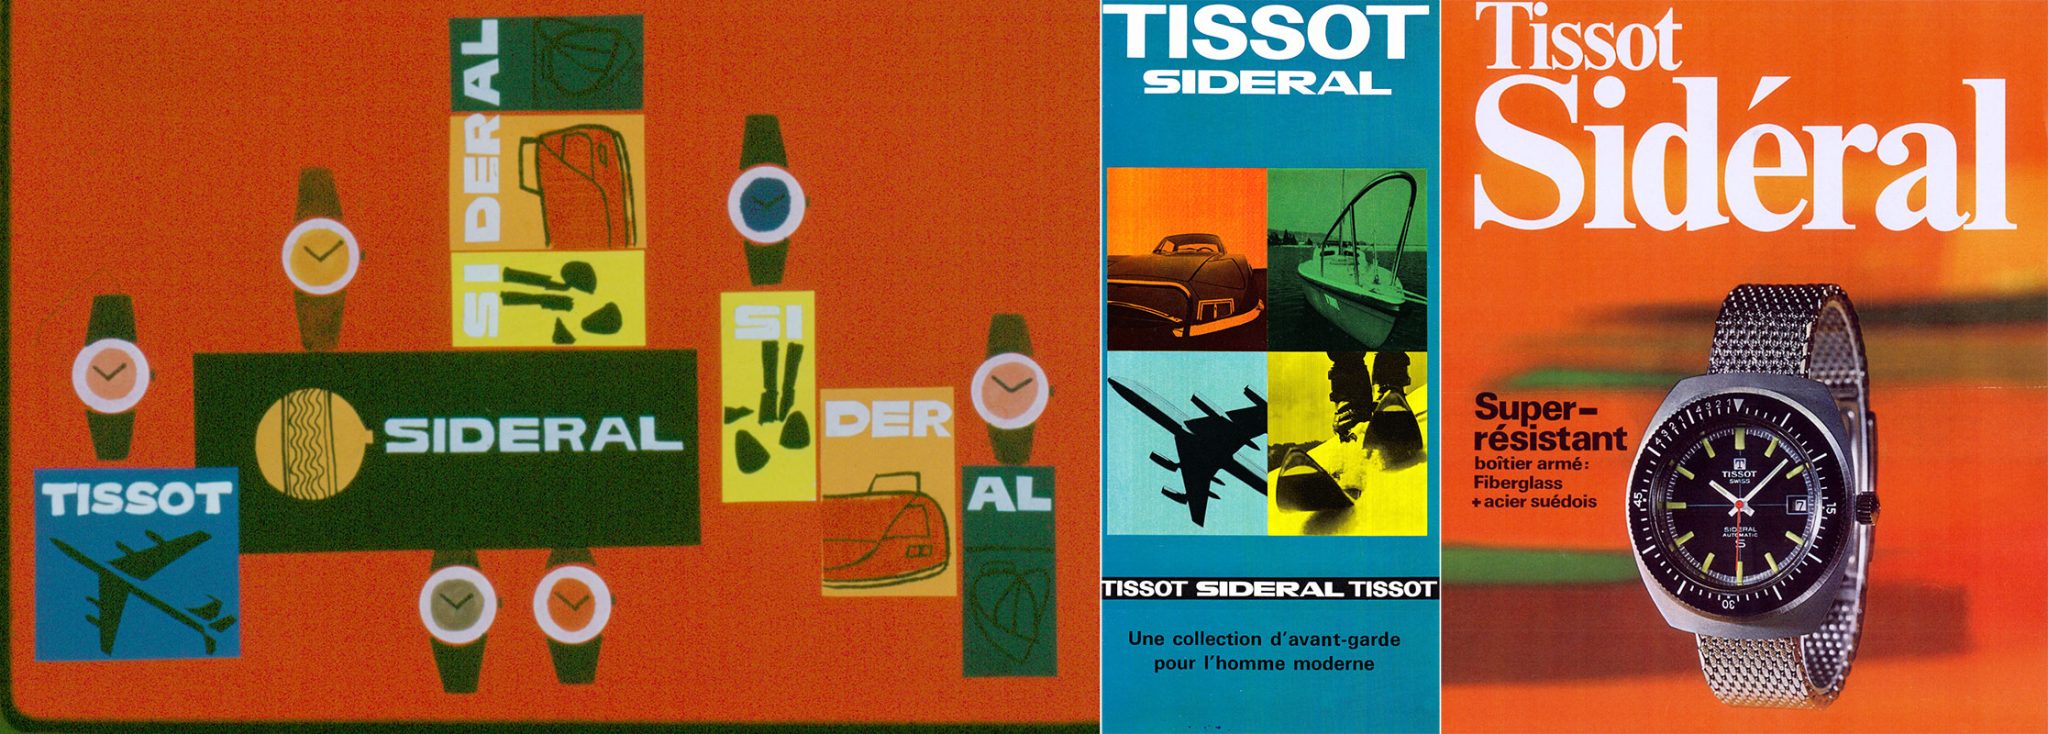 Tissot-Sideral-Werbecampaign-Tissot-Museum-Kollektion-1969